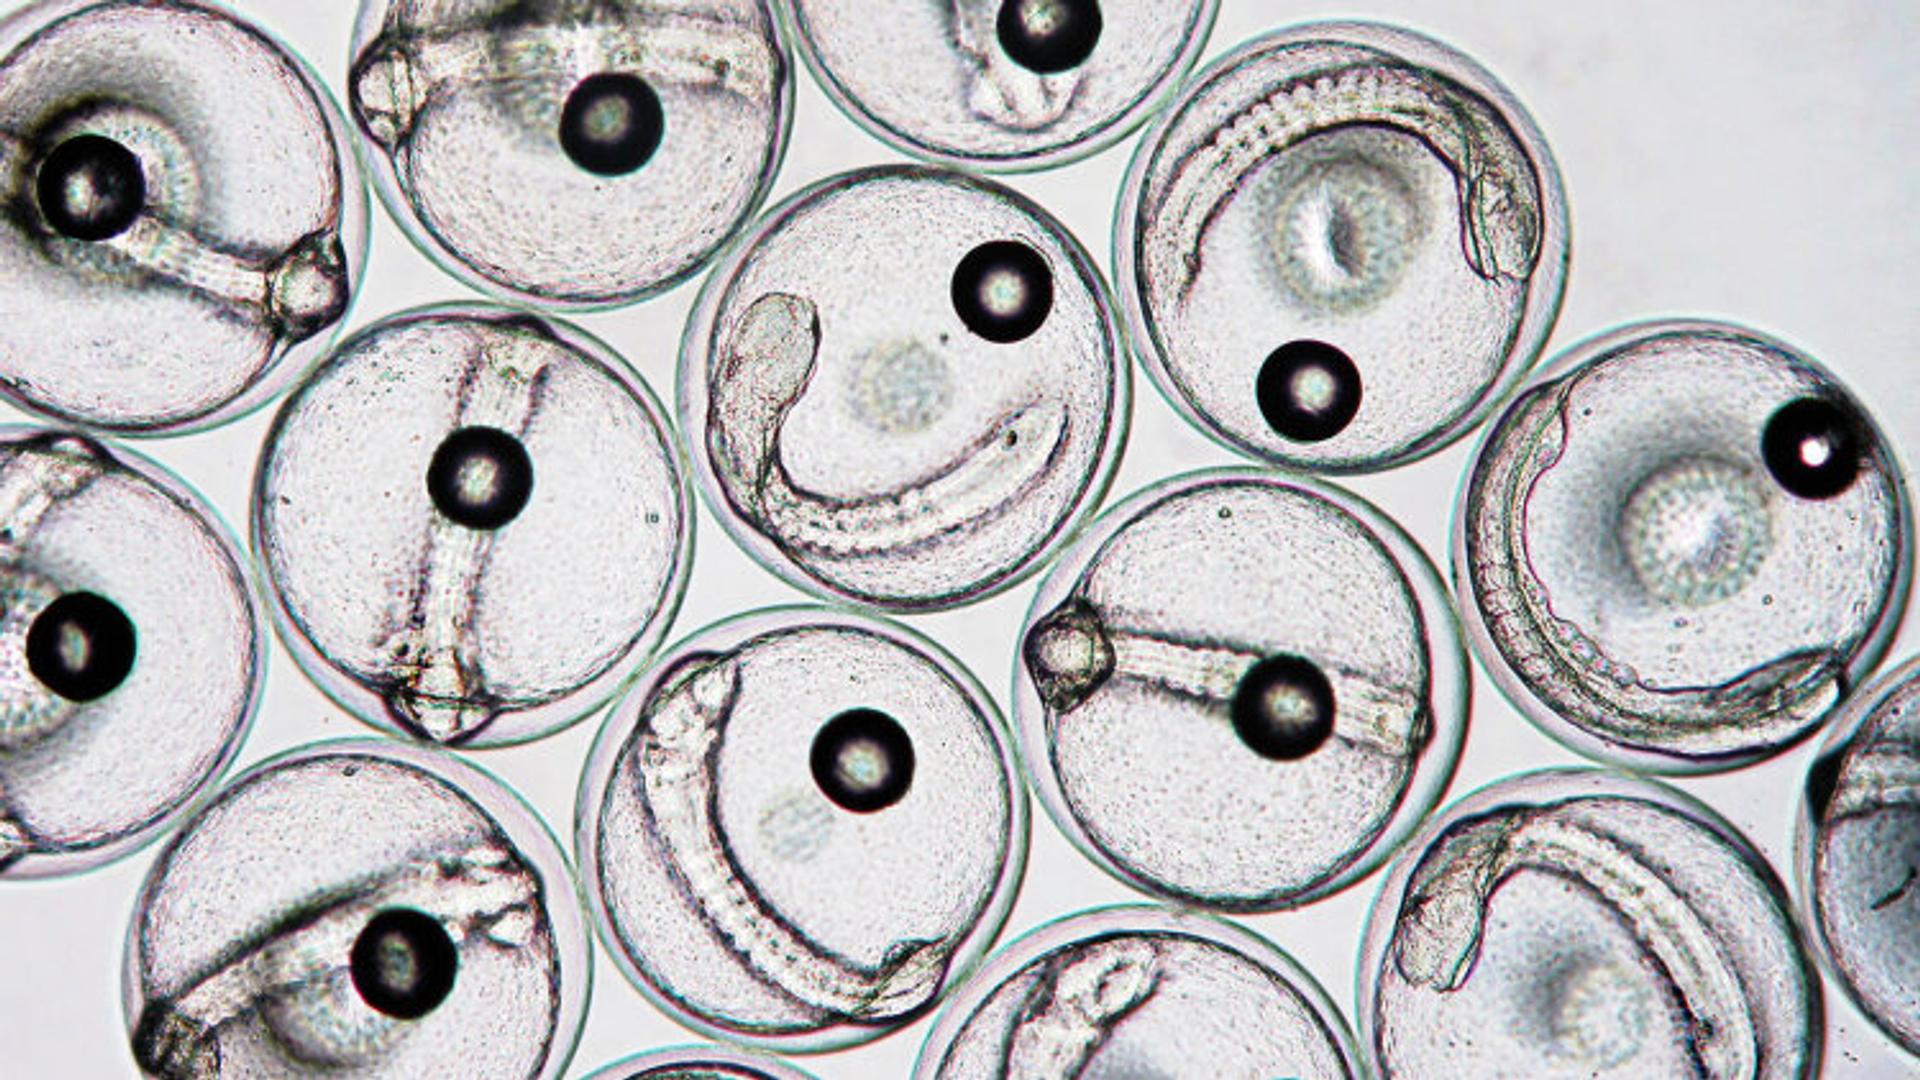 Fish eggs under microscope